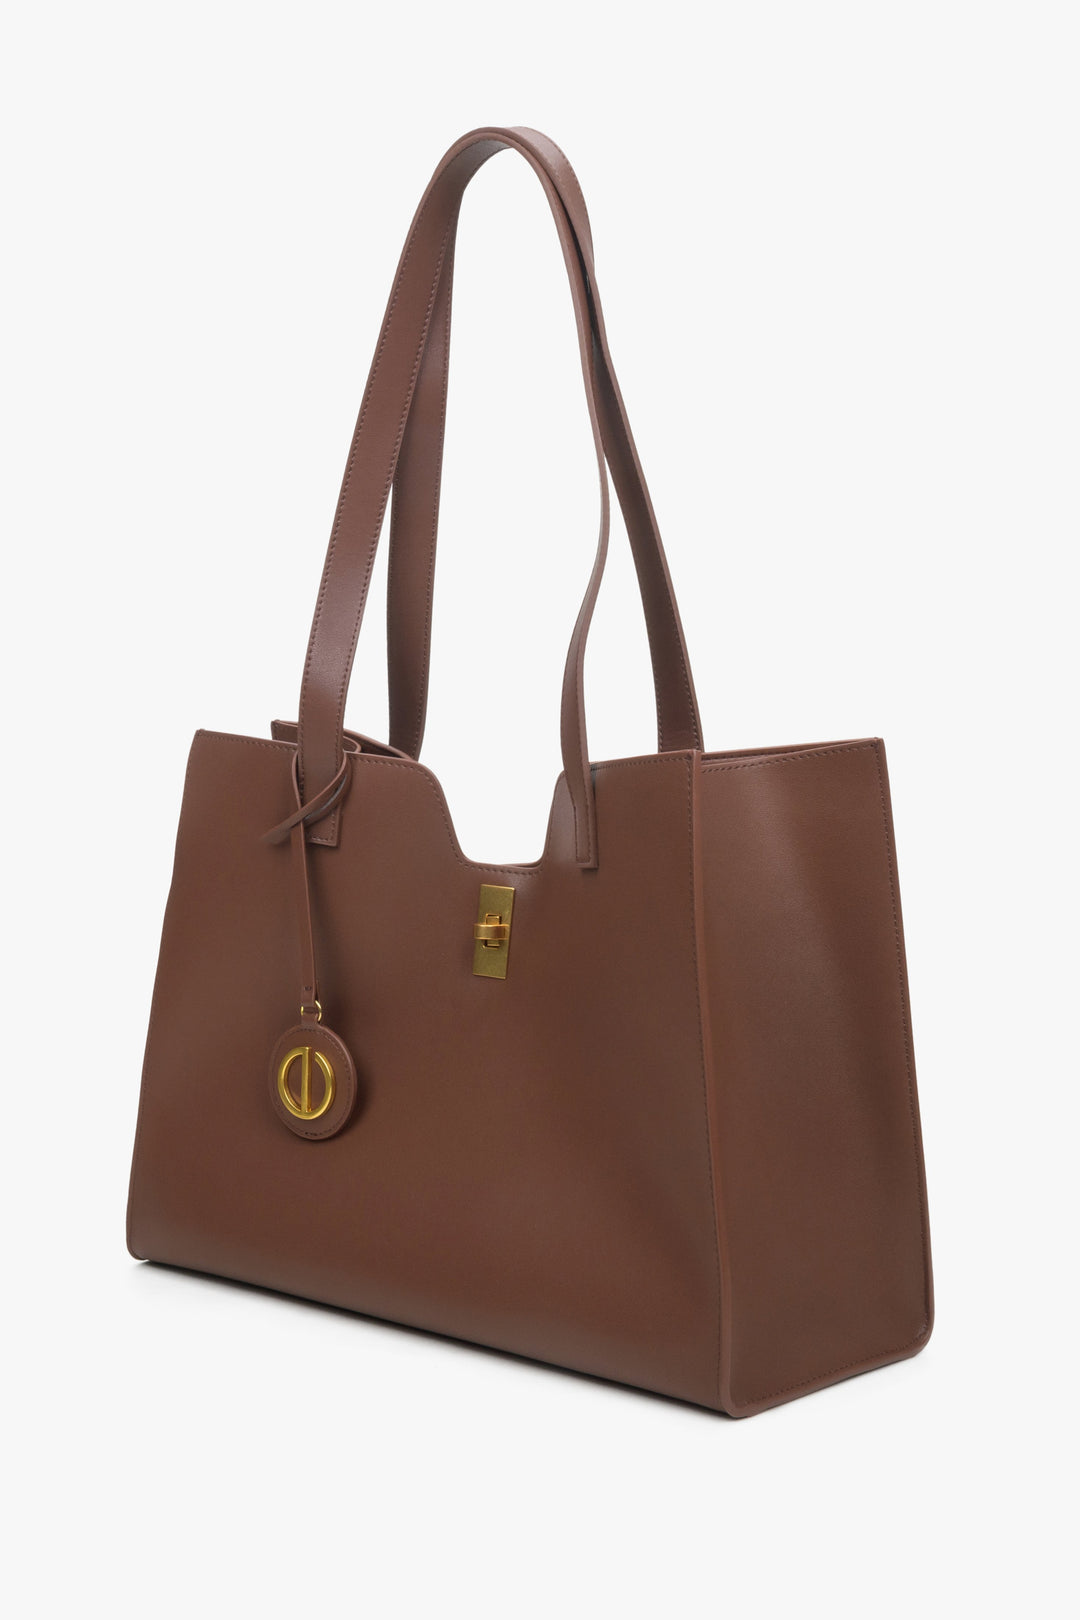 Women's dark brown leather shopper bag by Estro.